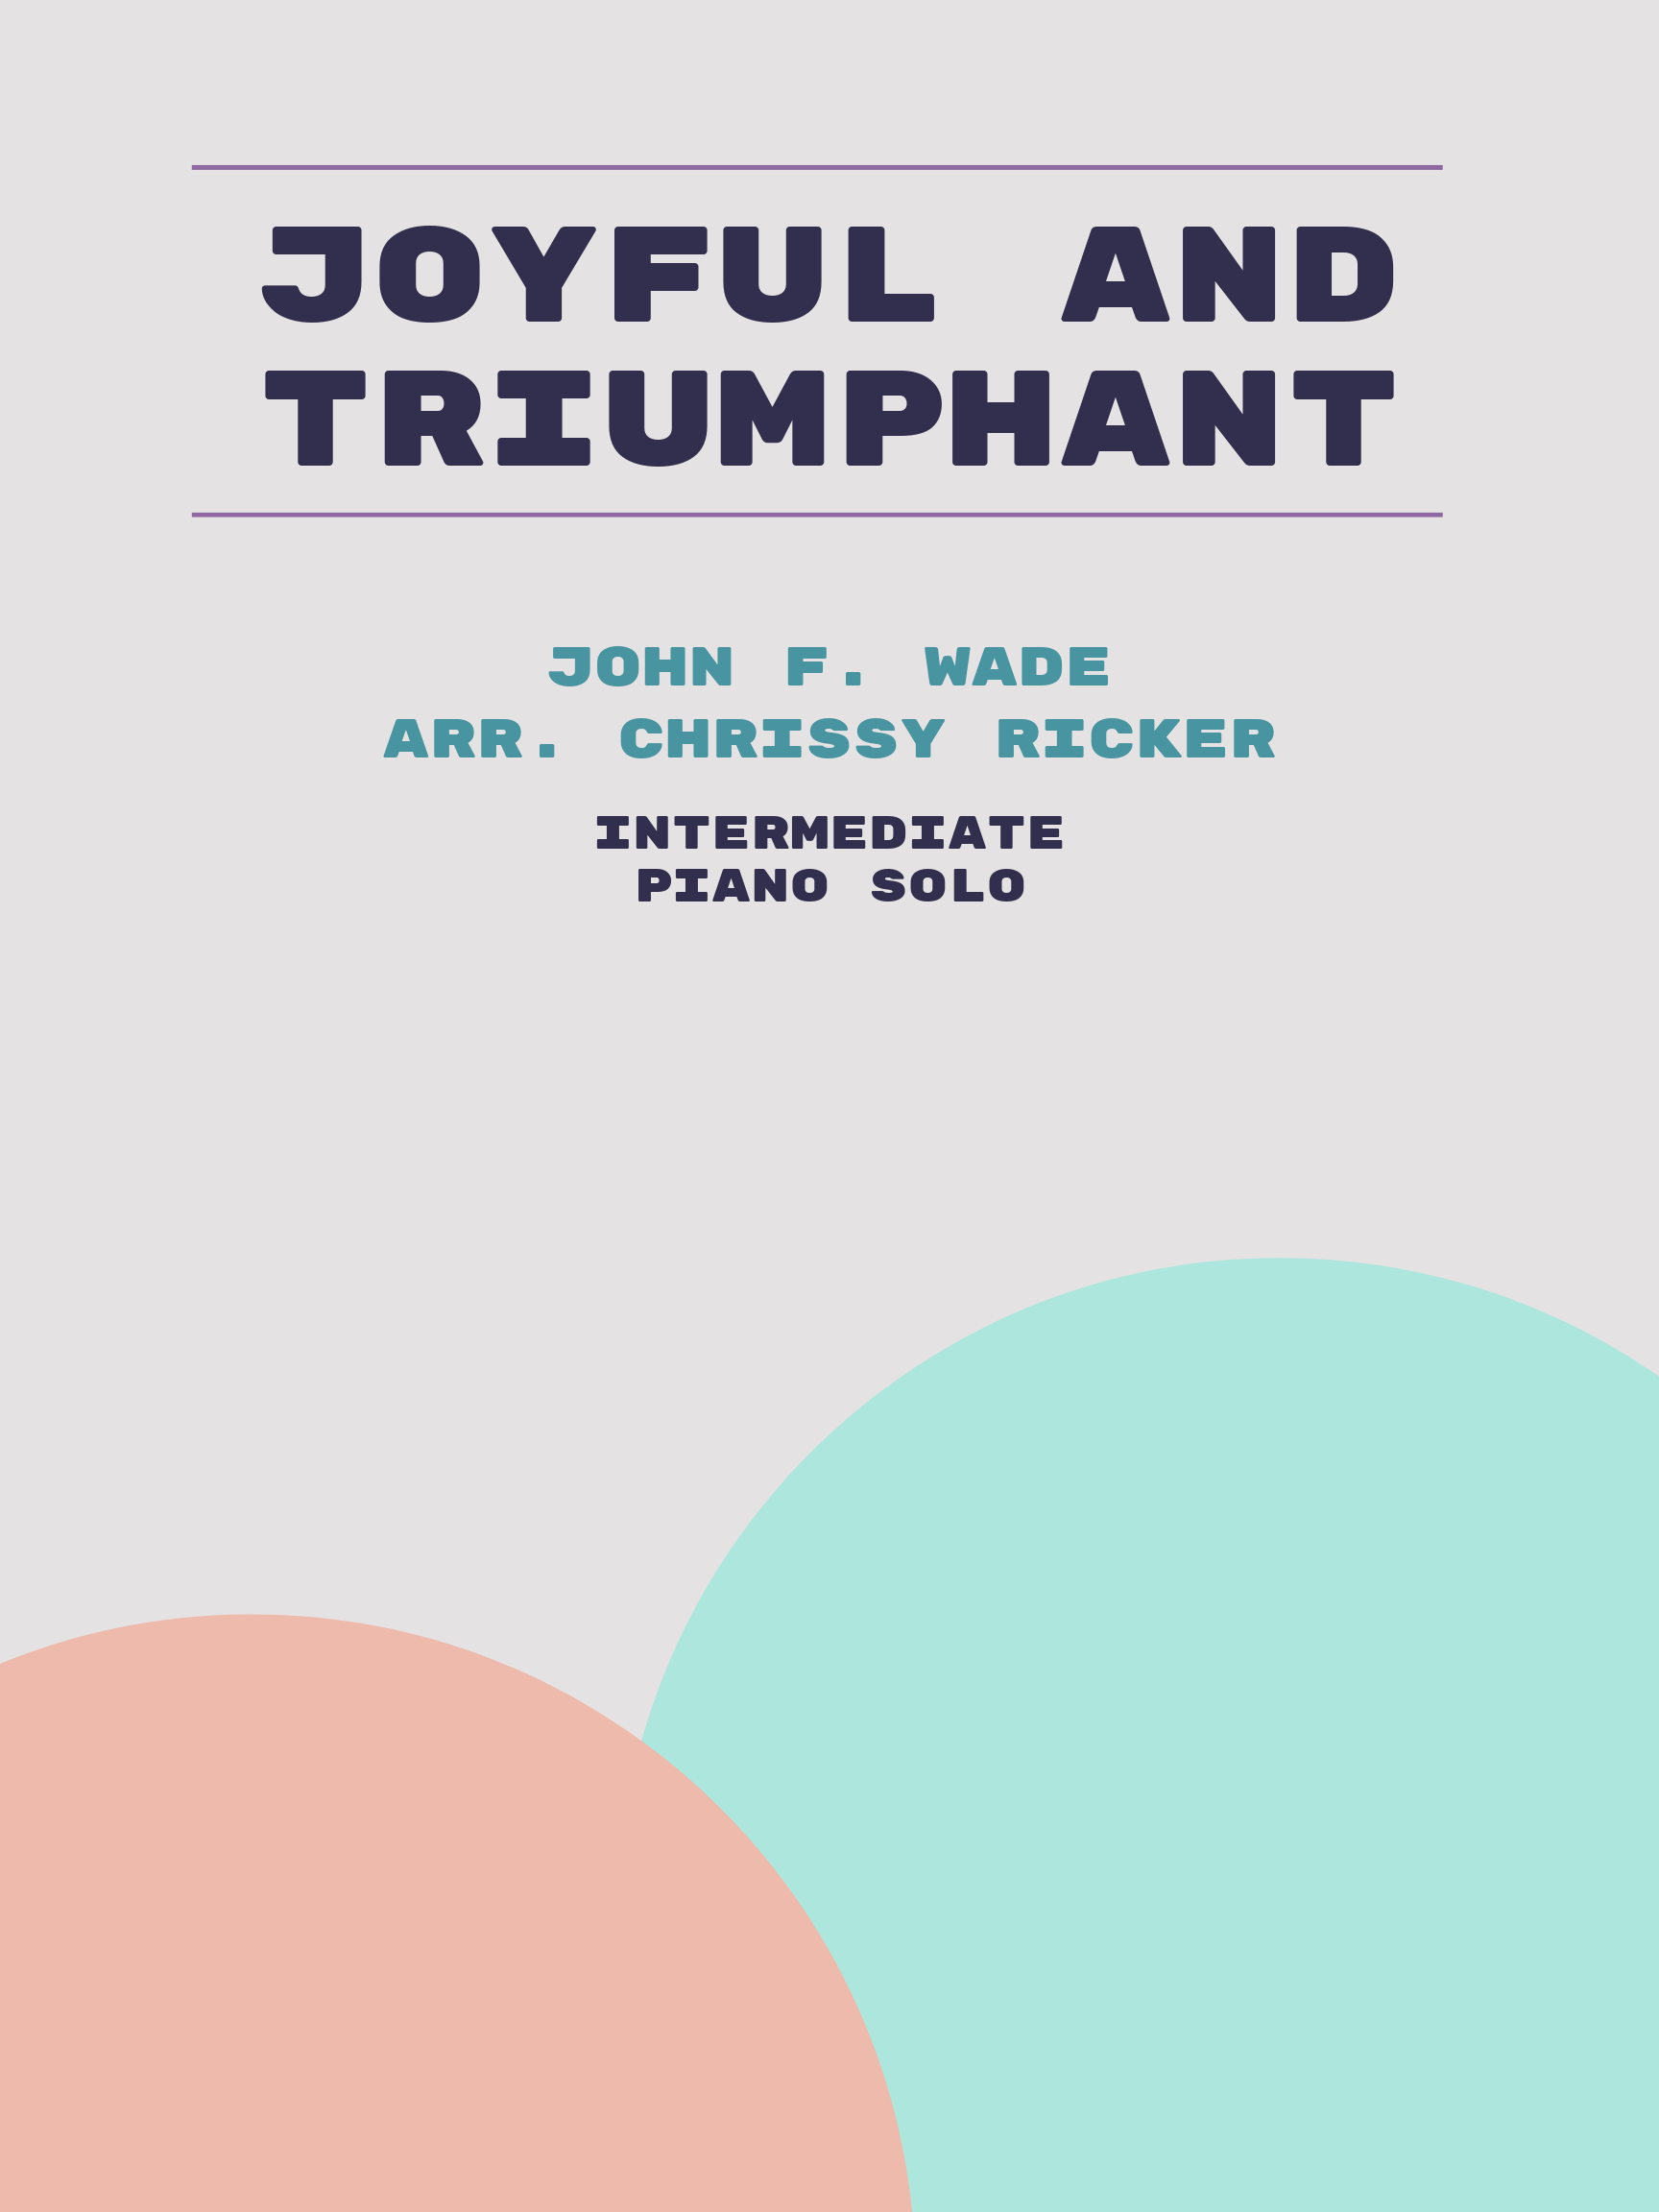 Joyful and Triumphant by John F. Wade